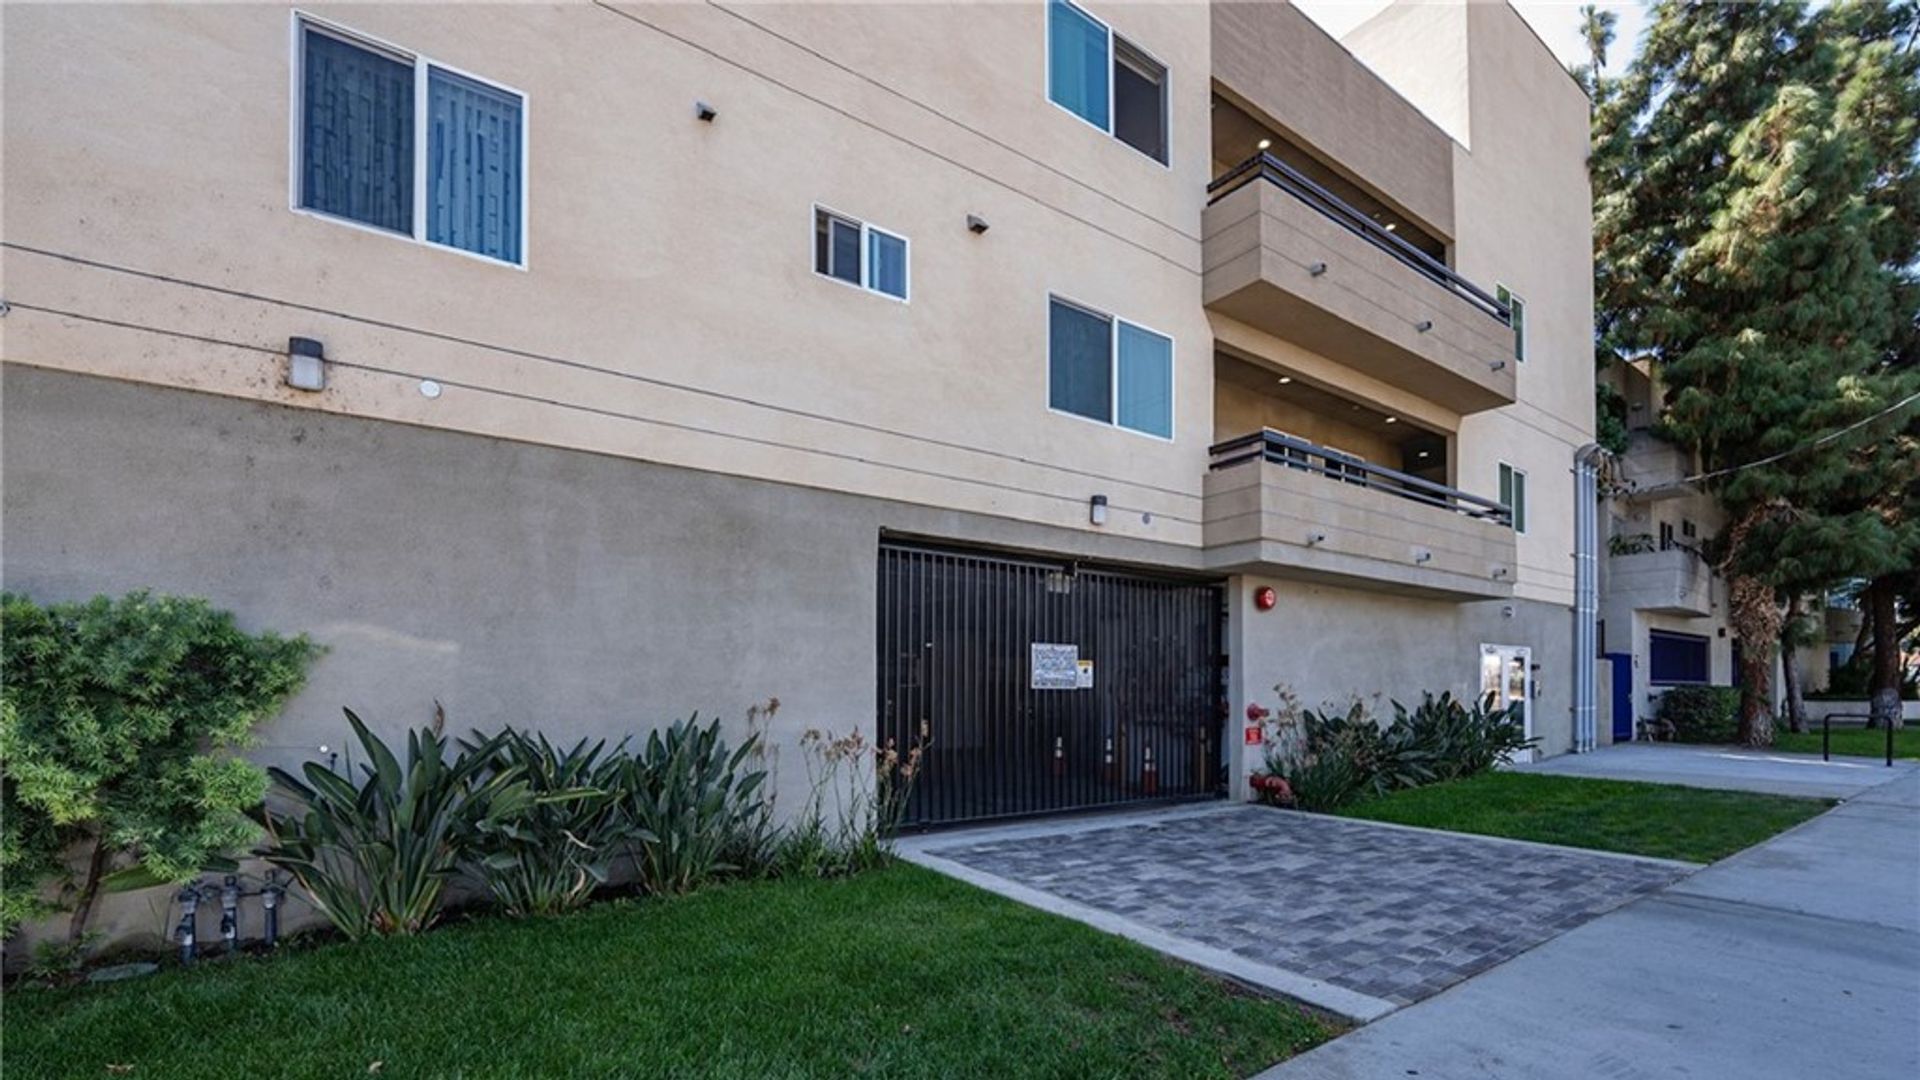 2 bedroom apartment at Vanowen St, North Hollywood, CA, USA | #37010435 ...